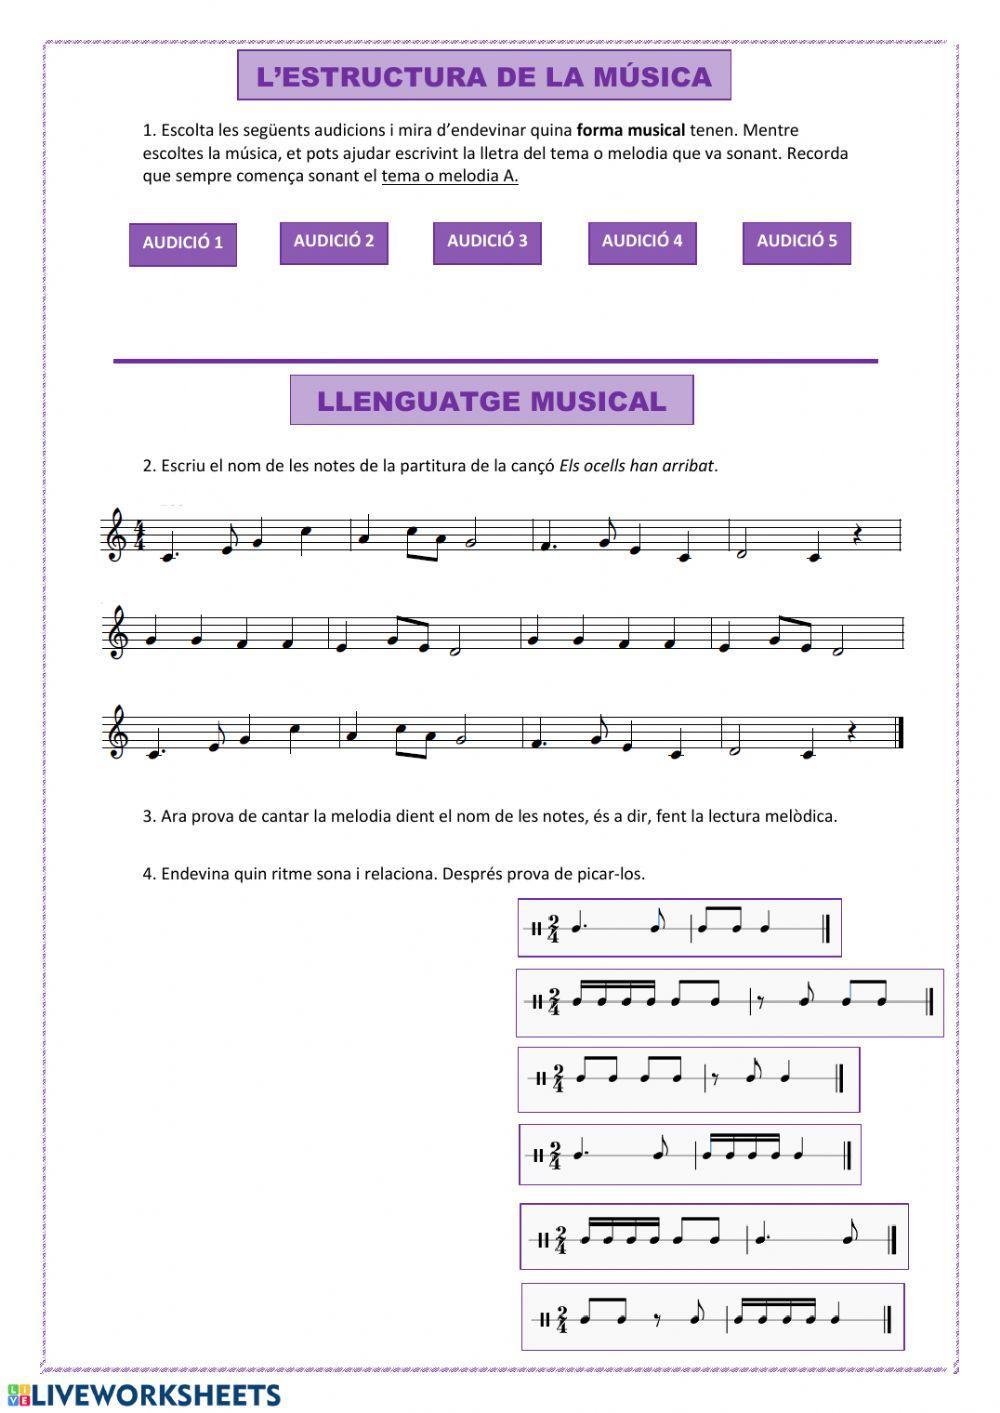 Formes musicals-LLenguatge musical